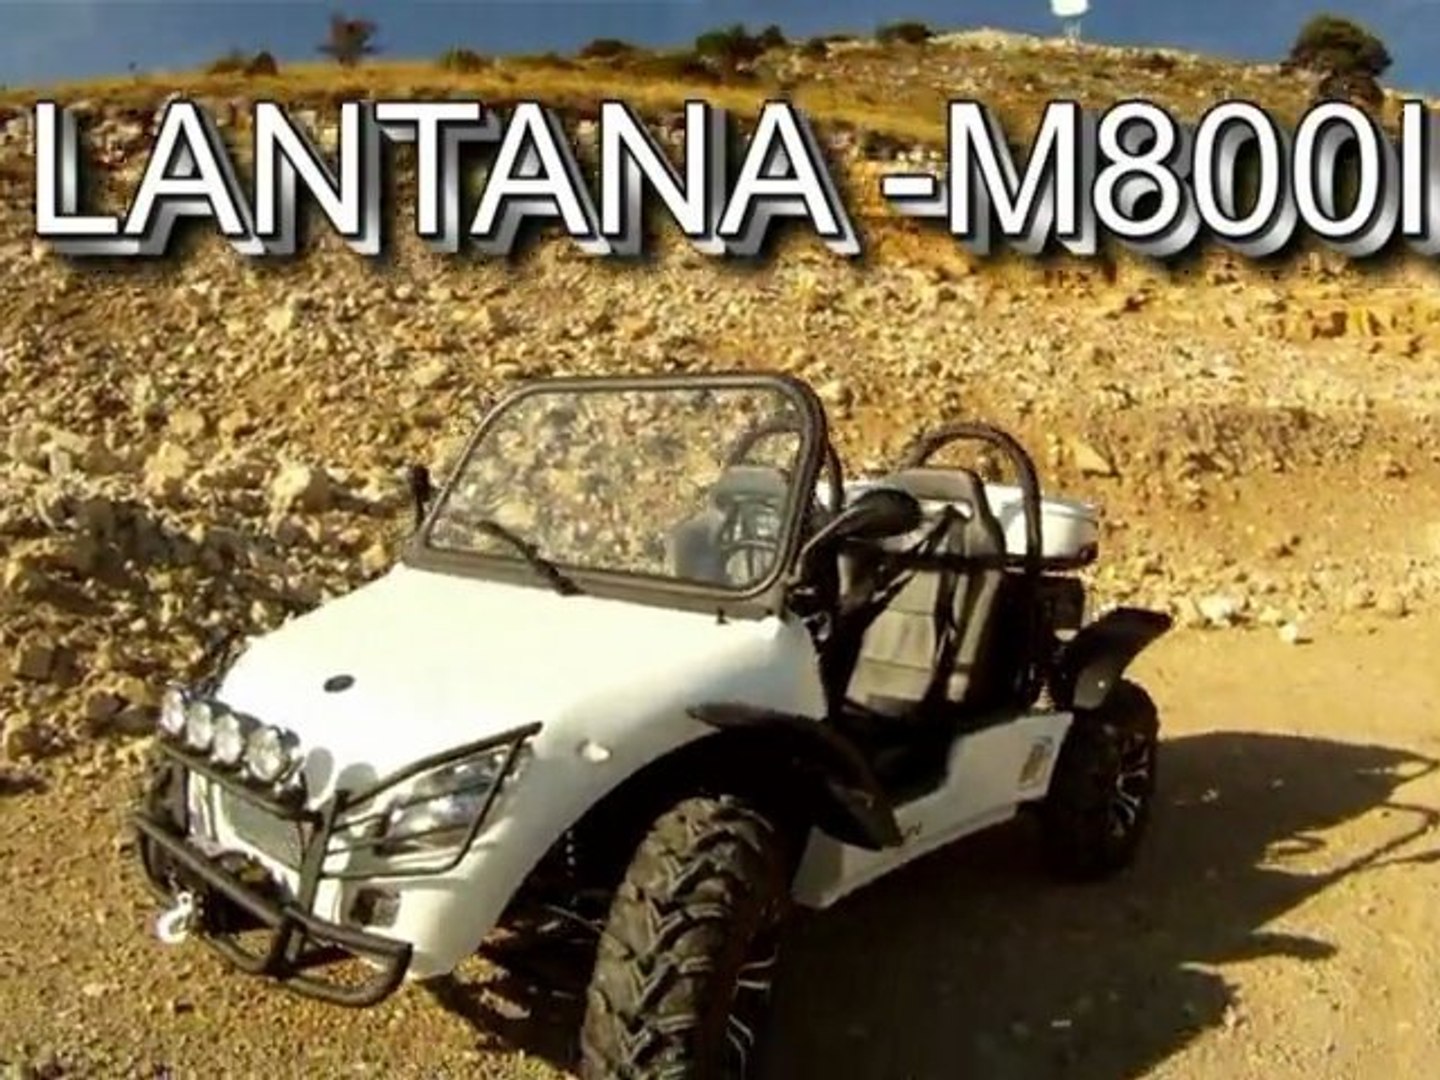 Lantana M800I Routebuggy 2011 - Vidéo Dailymotion